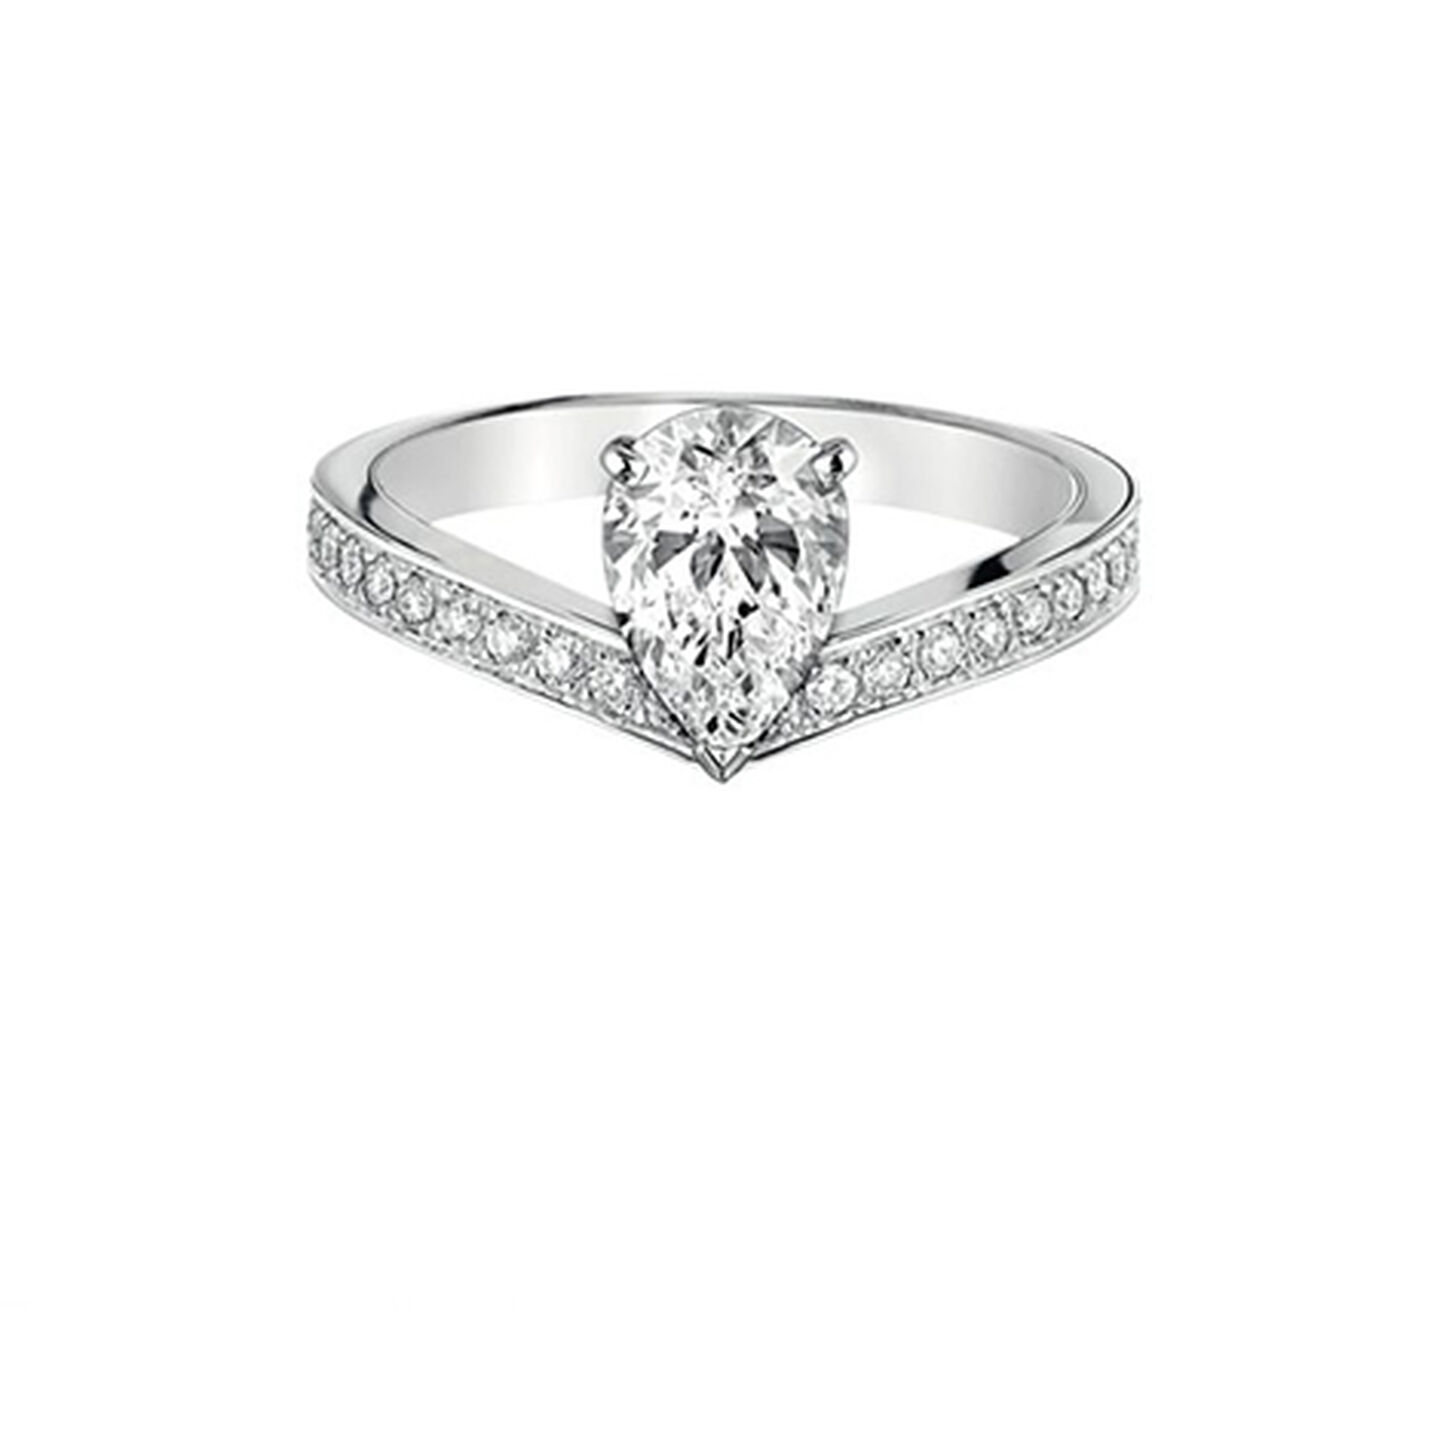 Josephine diamond engagement ring